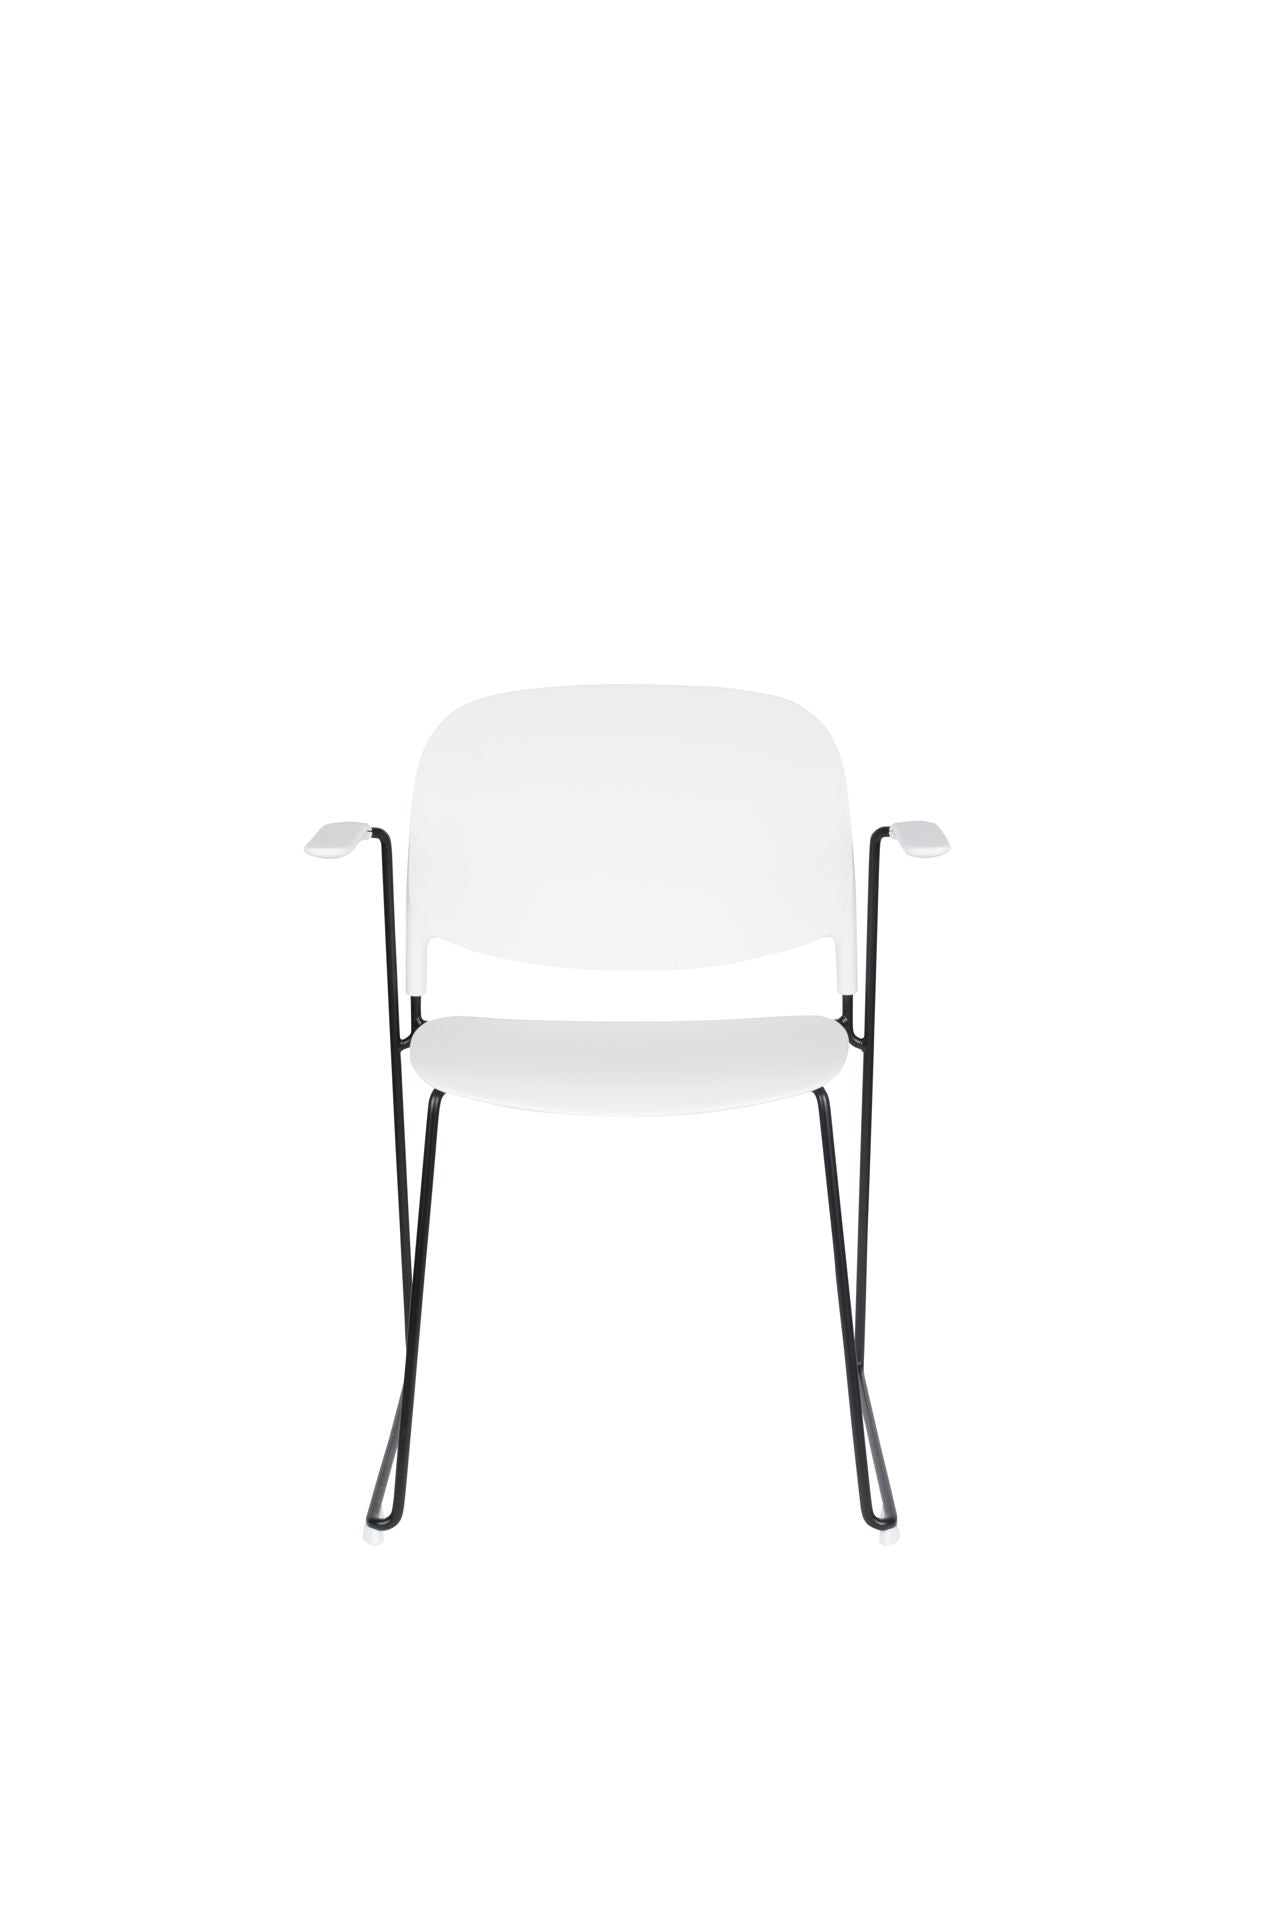 Nancy's Frostburg Chair - Retro - White, Black - Polypropylene, Steel, Plastic - 53 cm x 63.5 cm x 80.5 cm